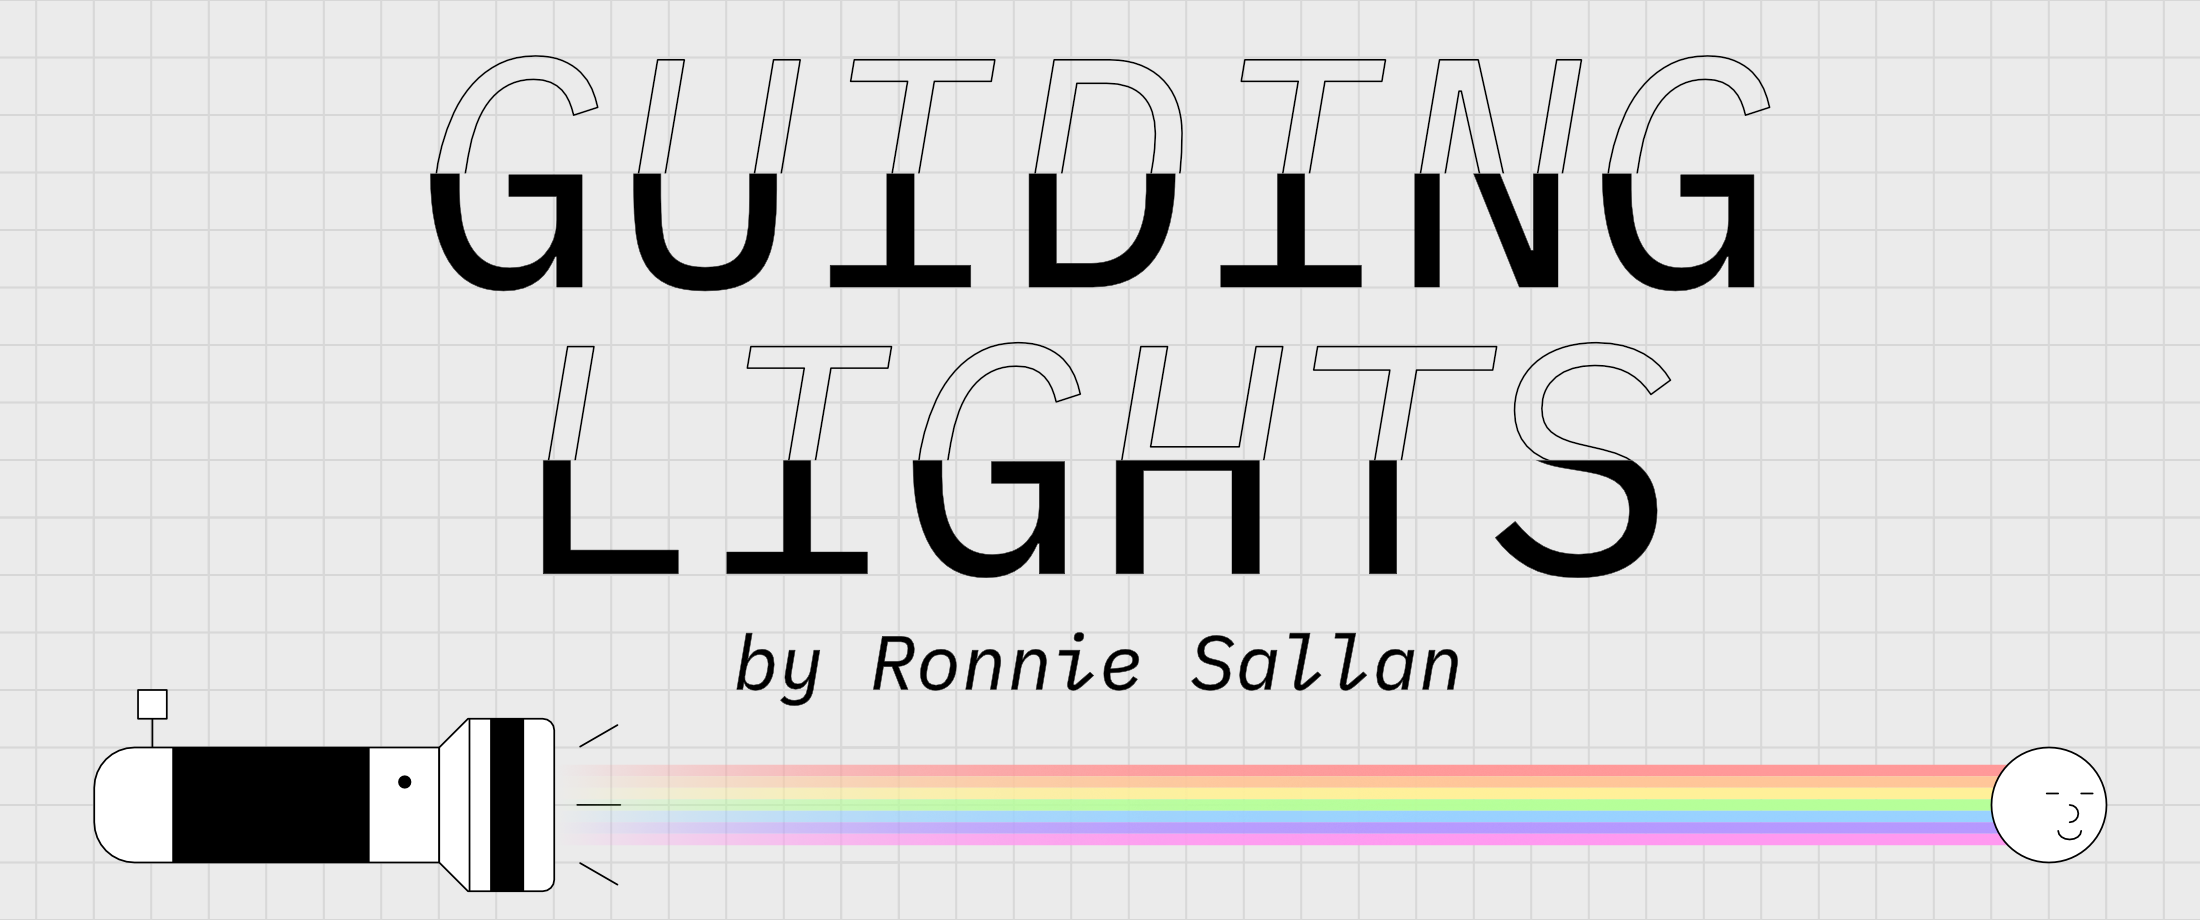 Guiding Lights